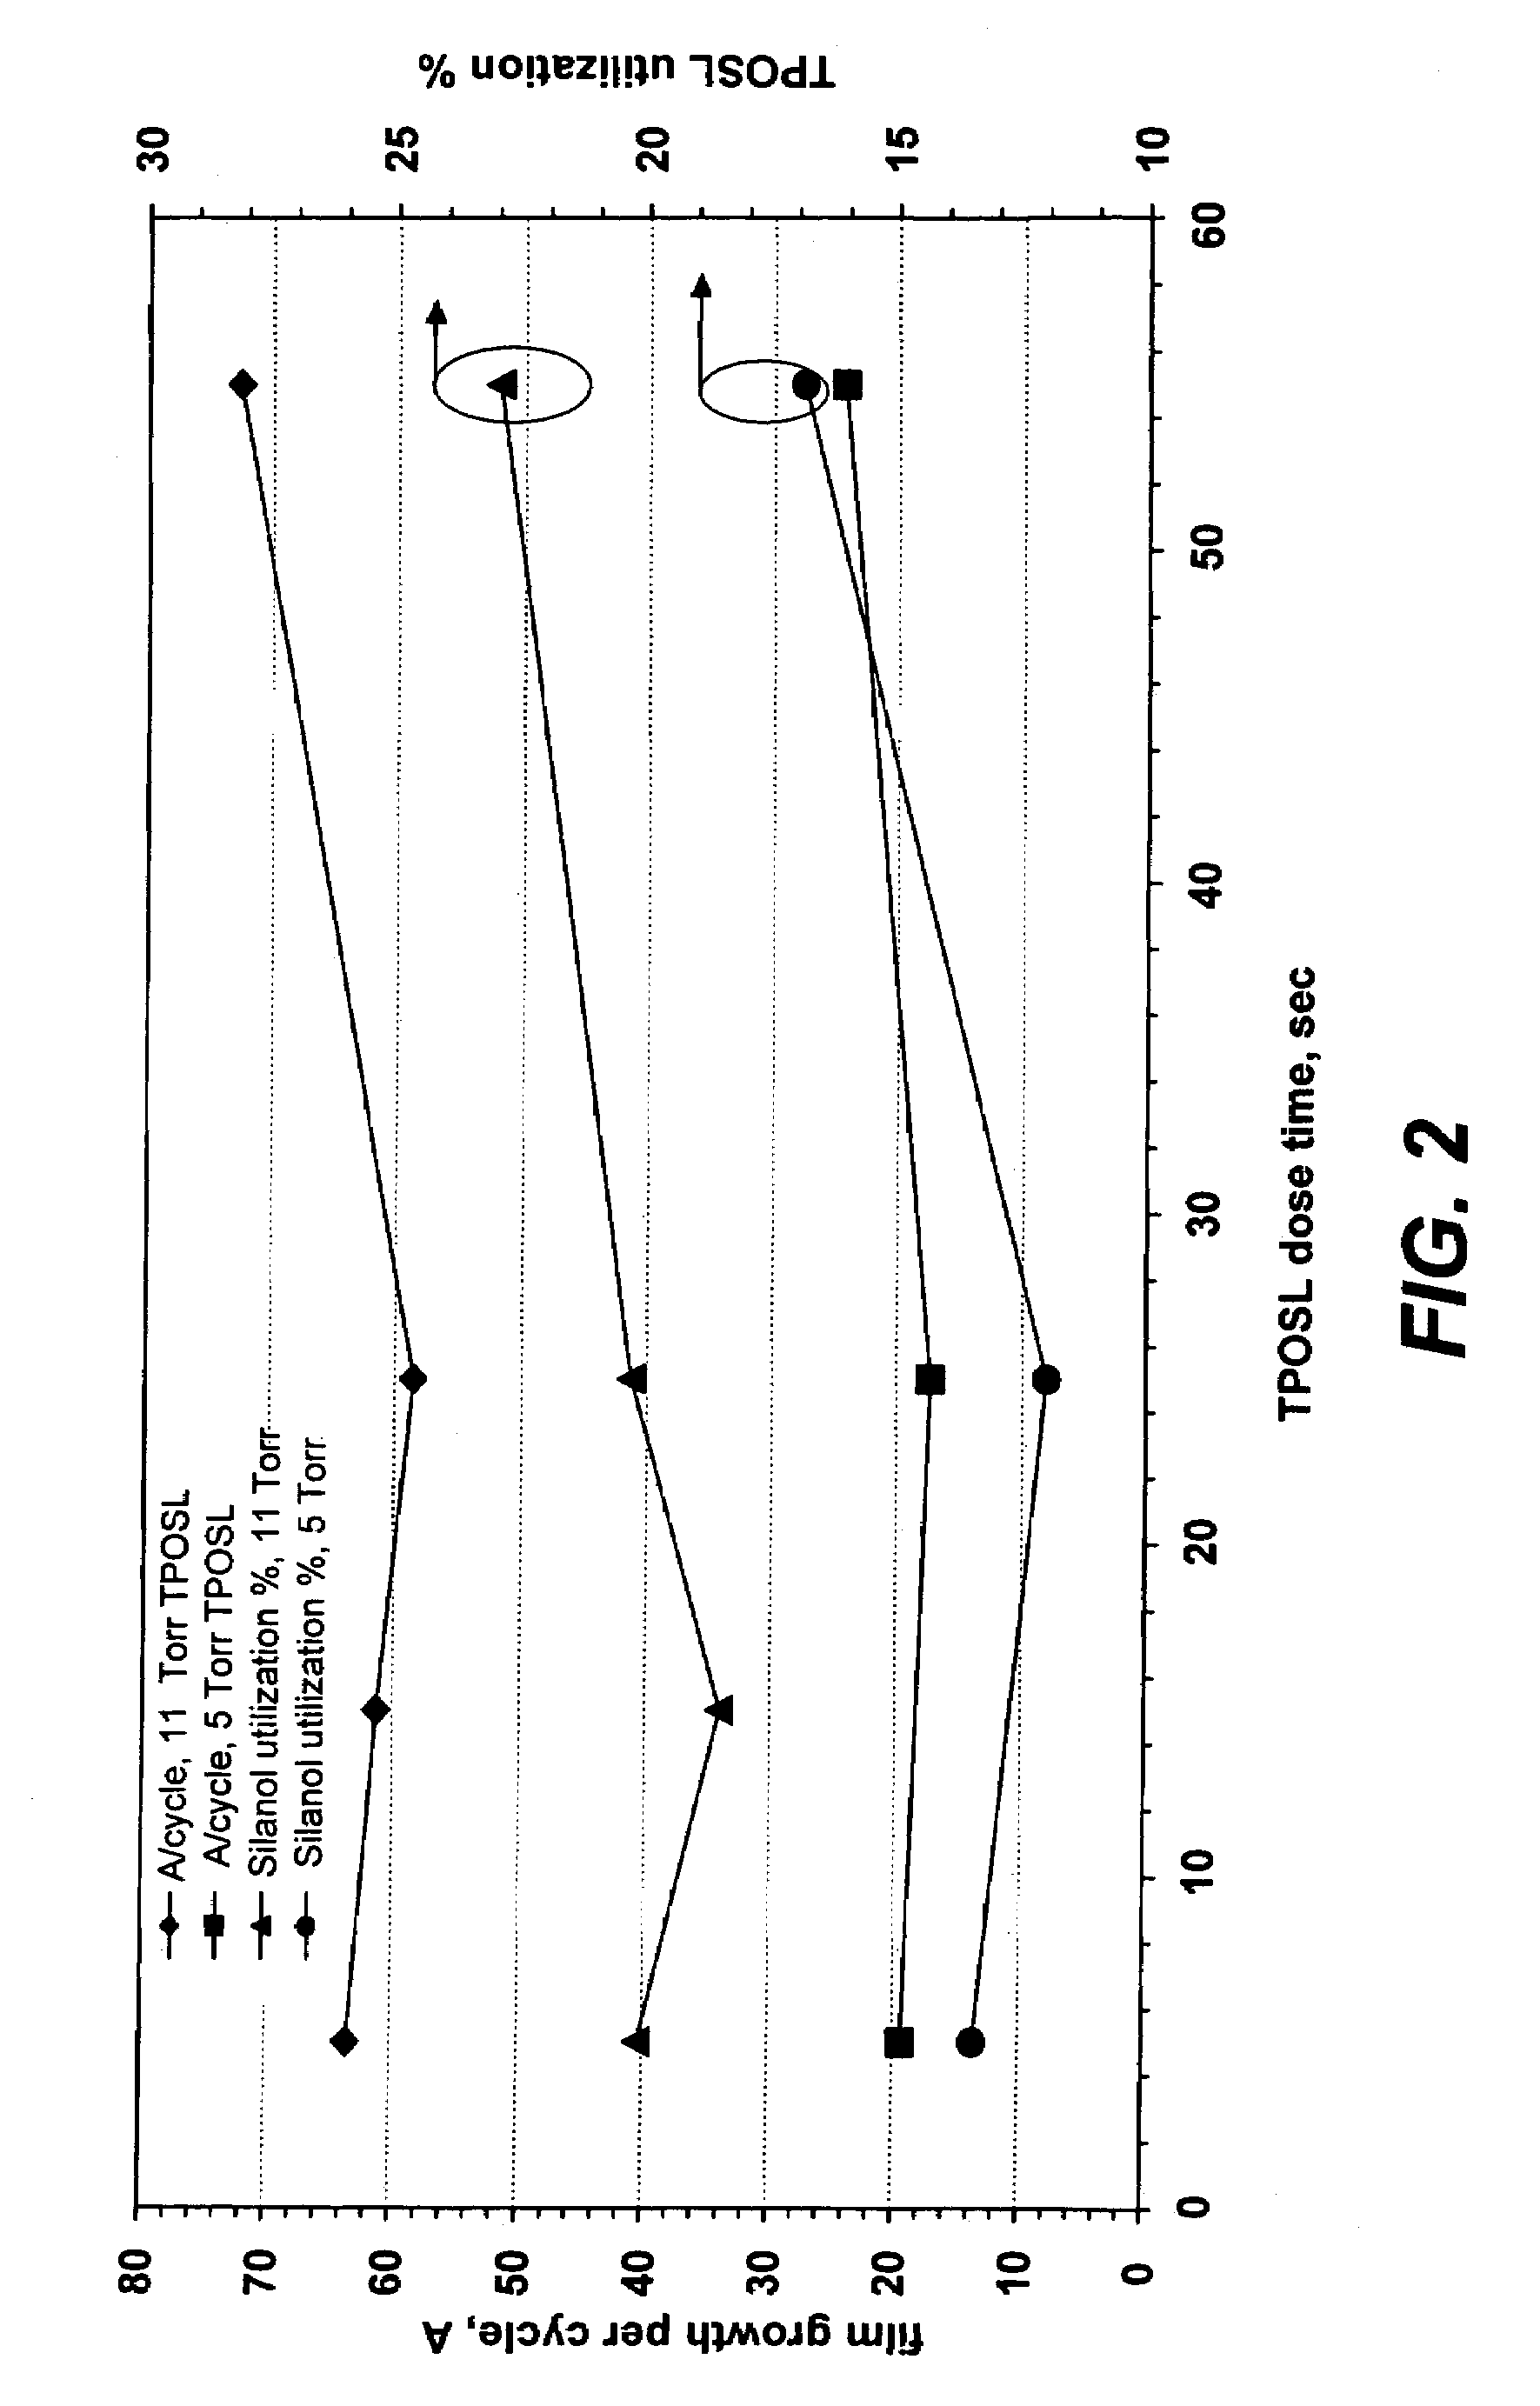 Optimal operation of conformal silica deposition reactors